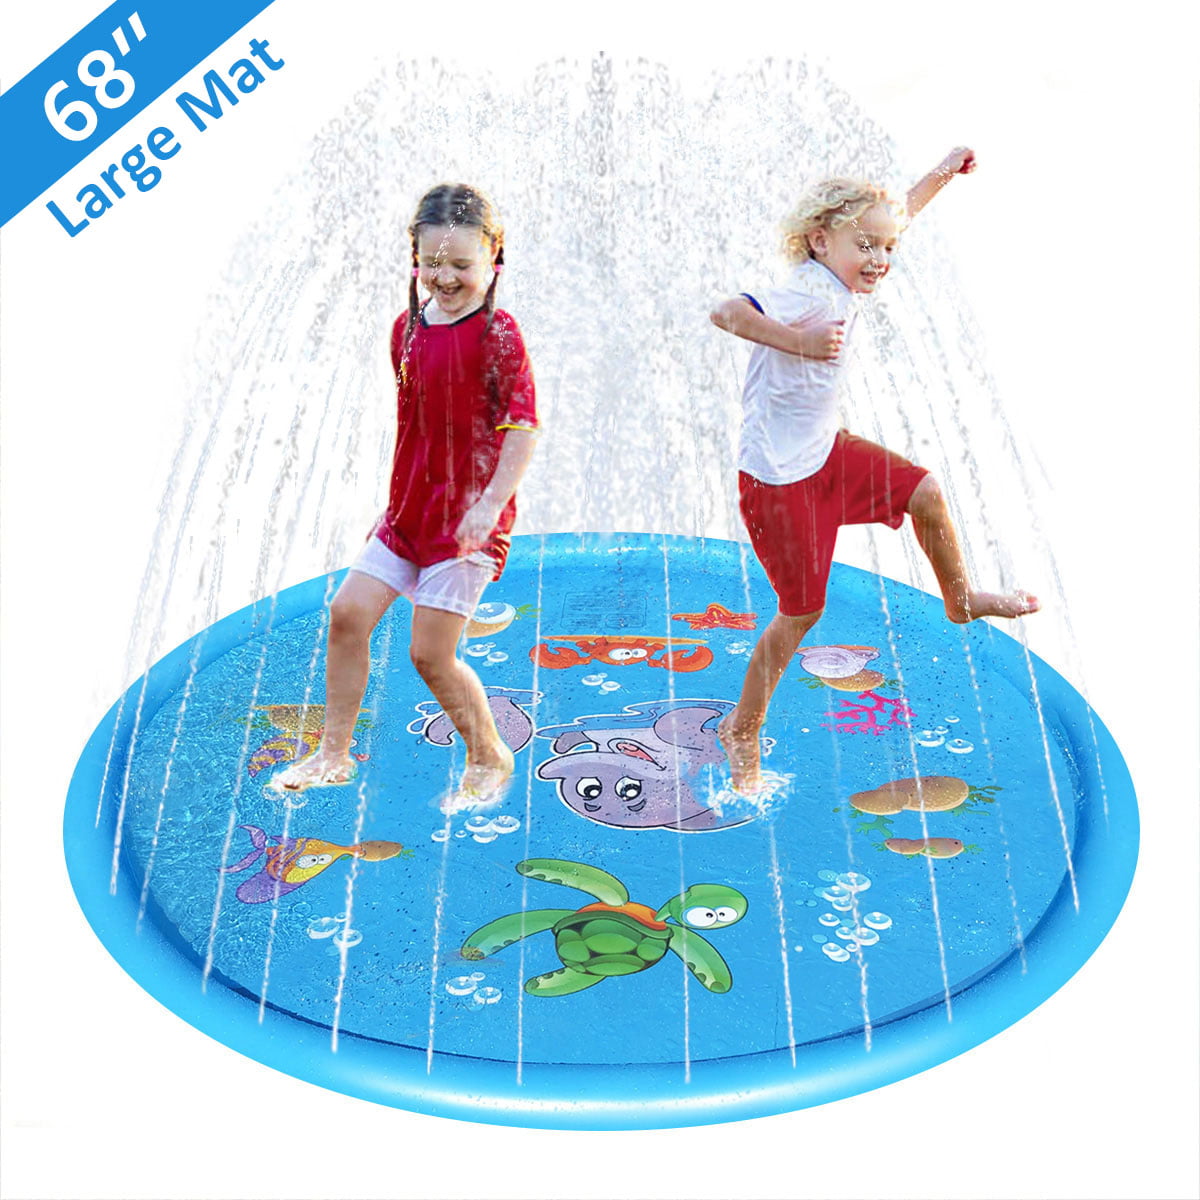 OOFAJ Kids Splash Pad Sprinkler,Splash Play Mat,Inflatable Water Spray Pad Round Water Splash Play Pool Playing Sprinkler Mat Yard Outdoor Fun Swimming Pools